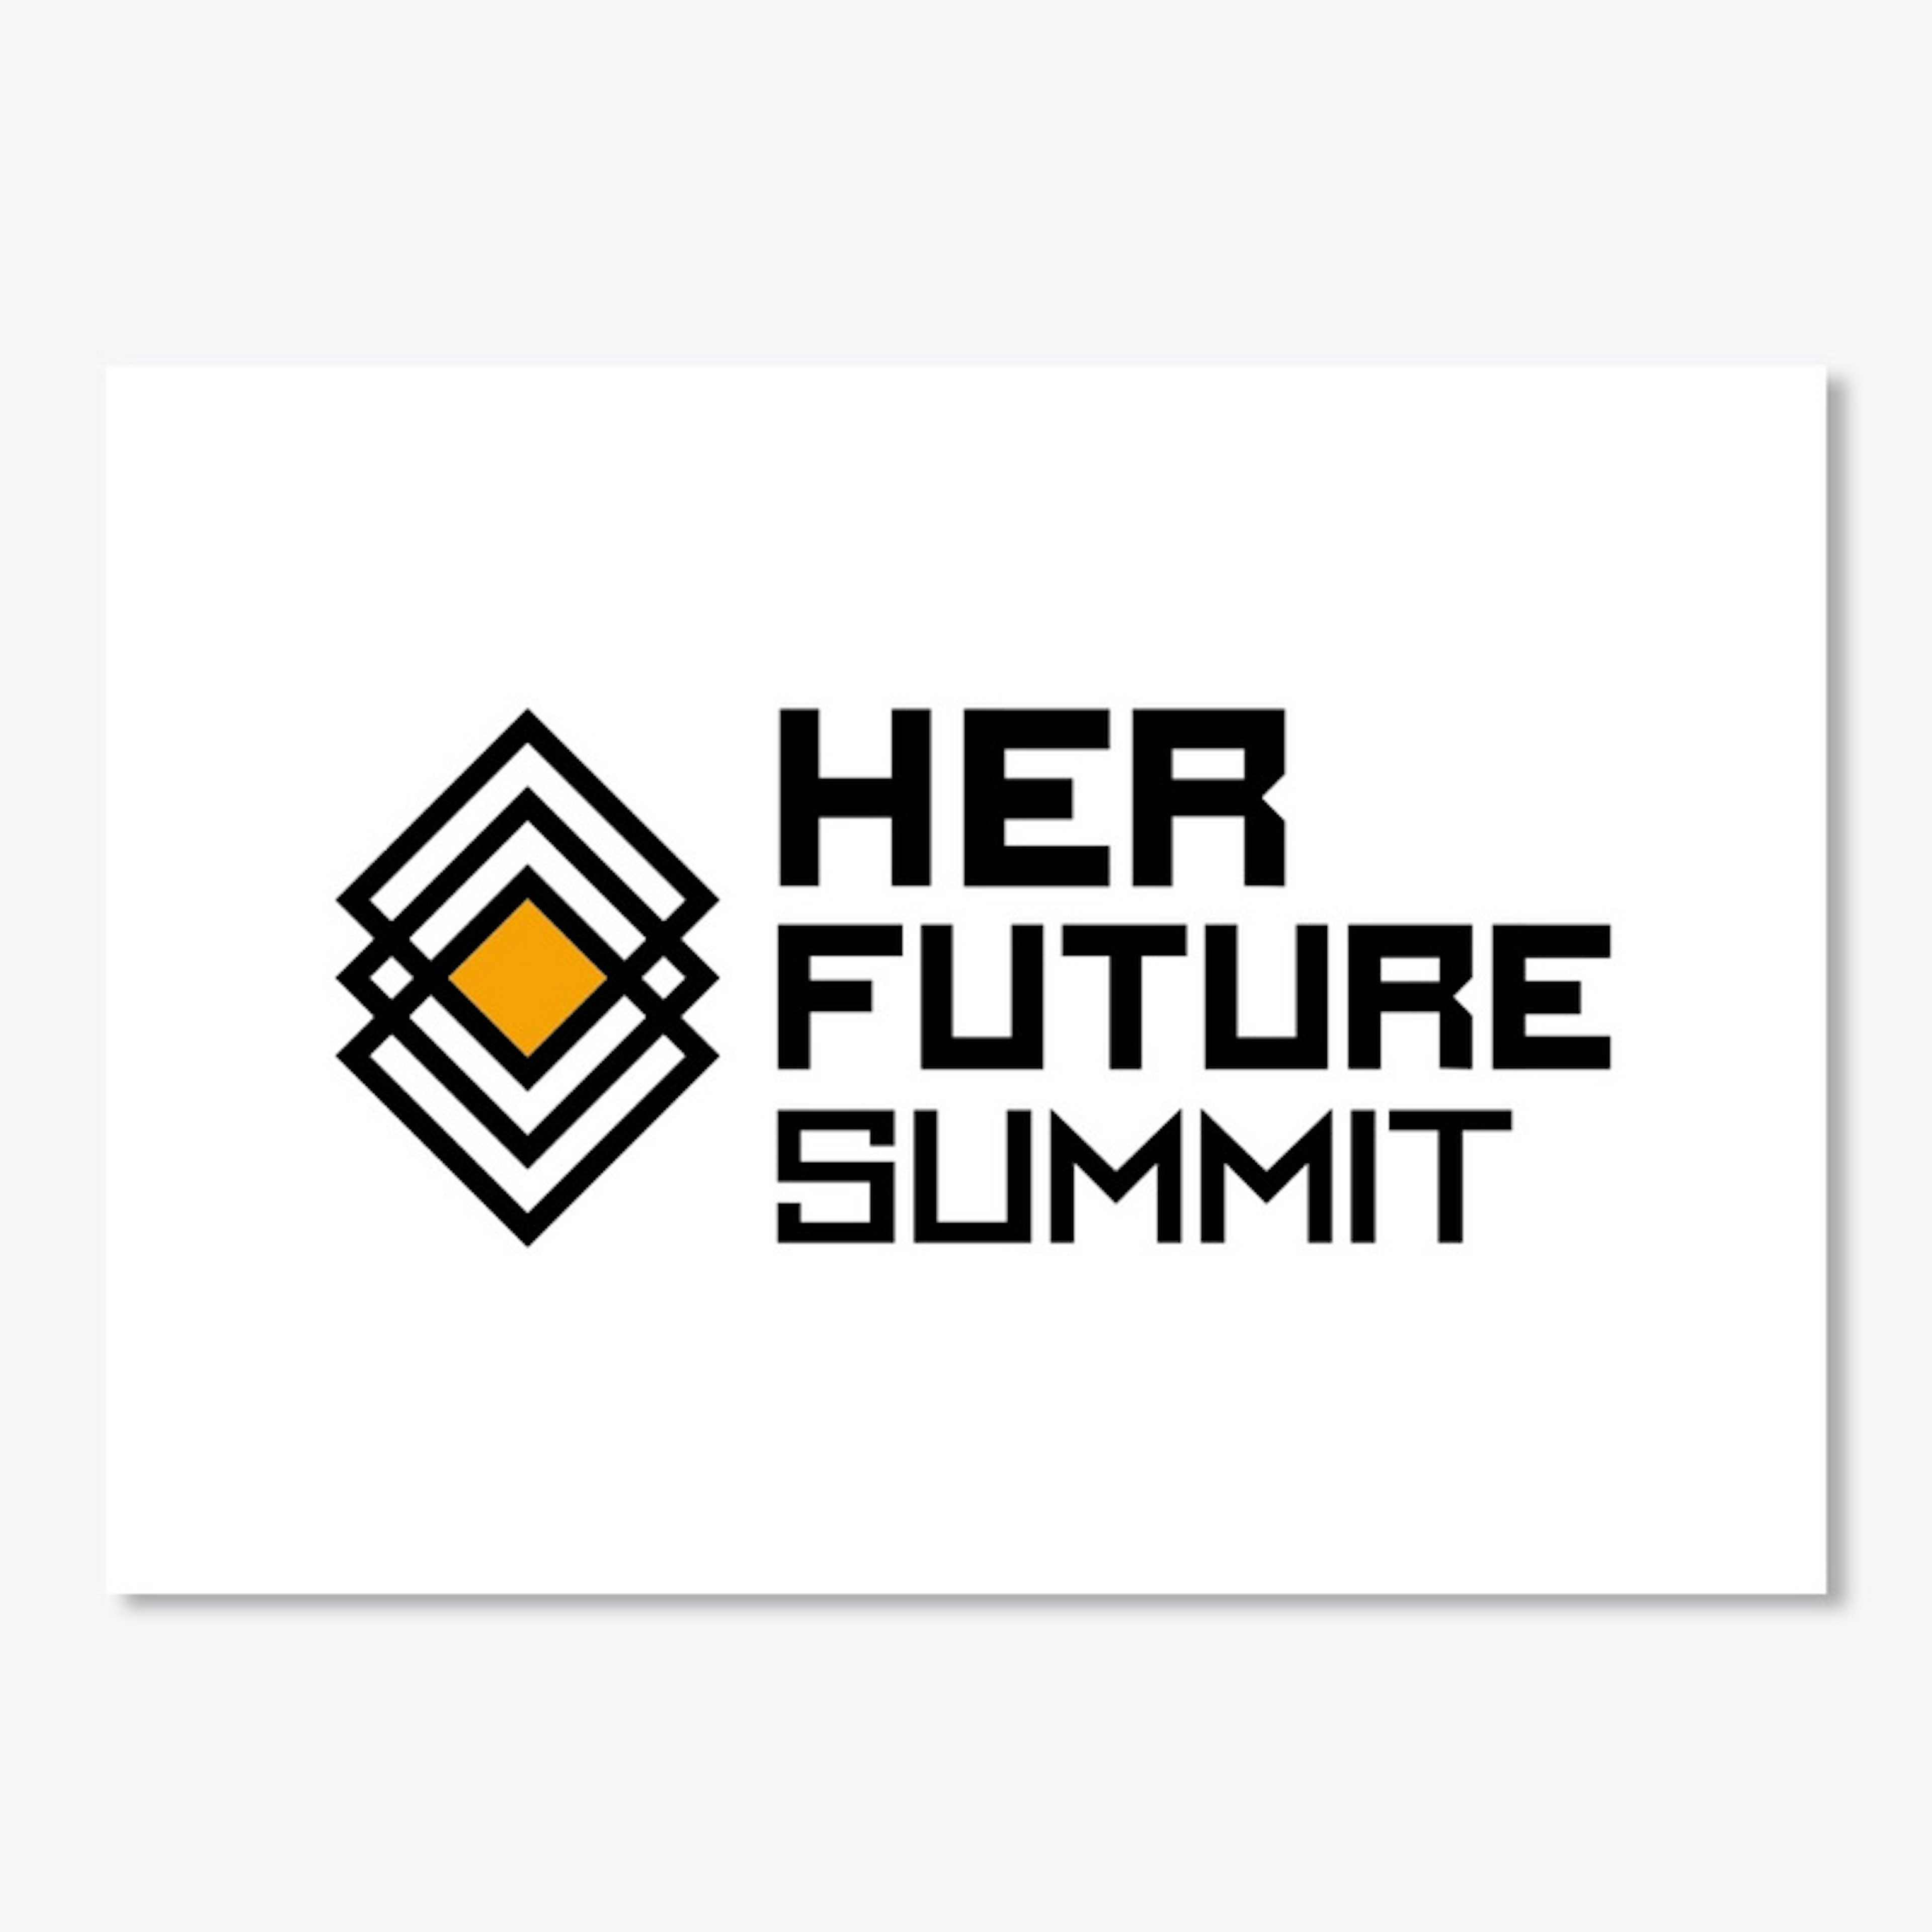 Her Future Summit Swag